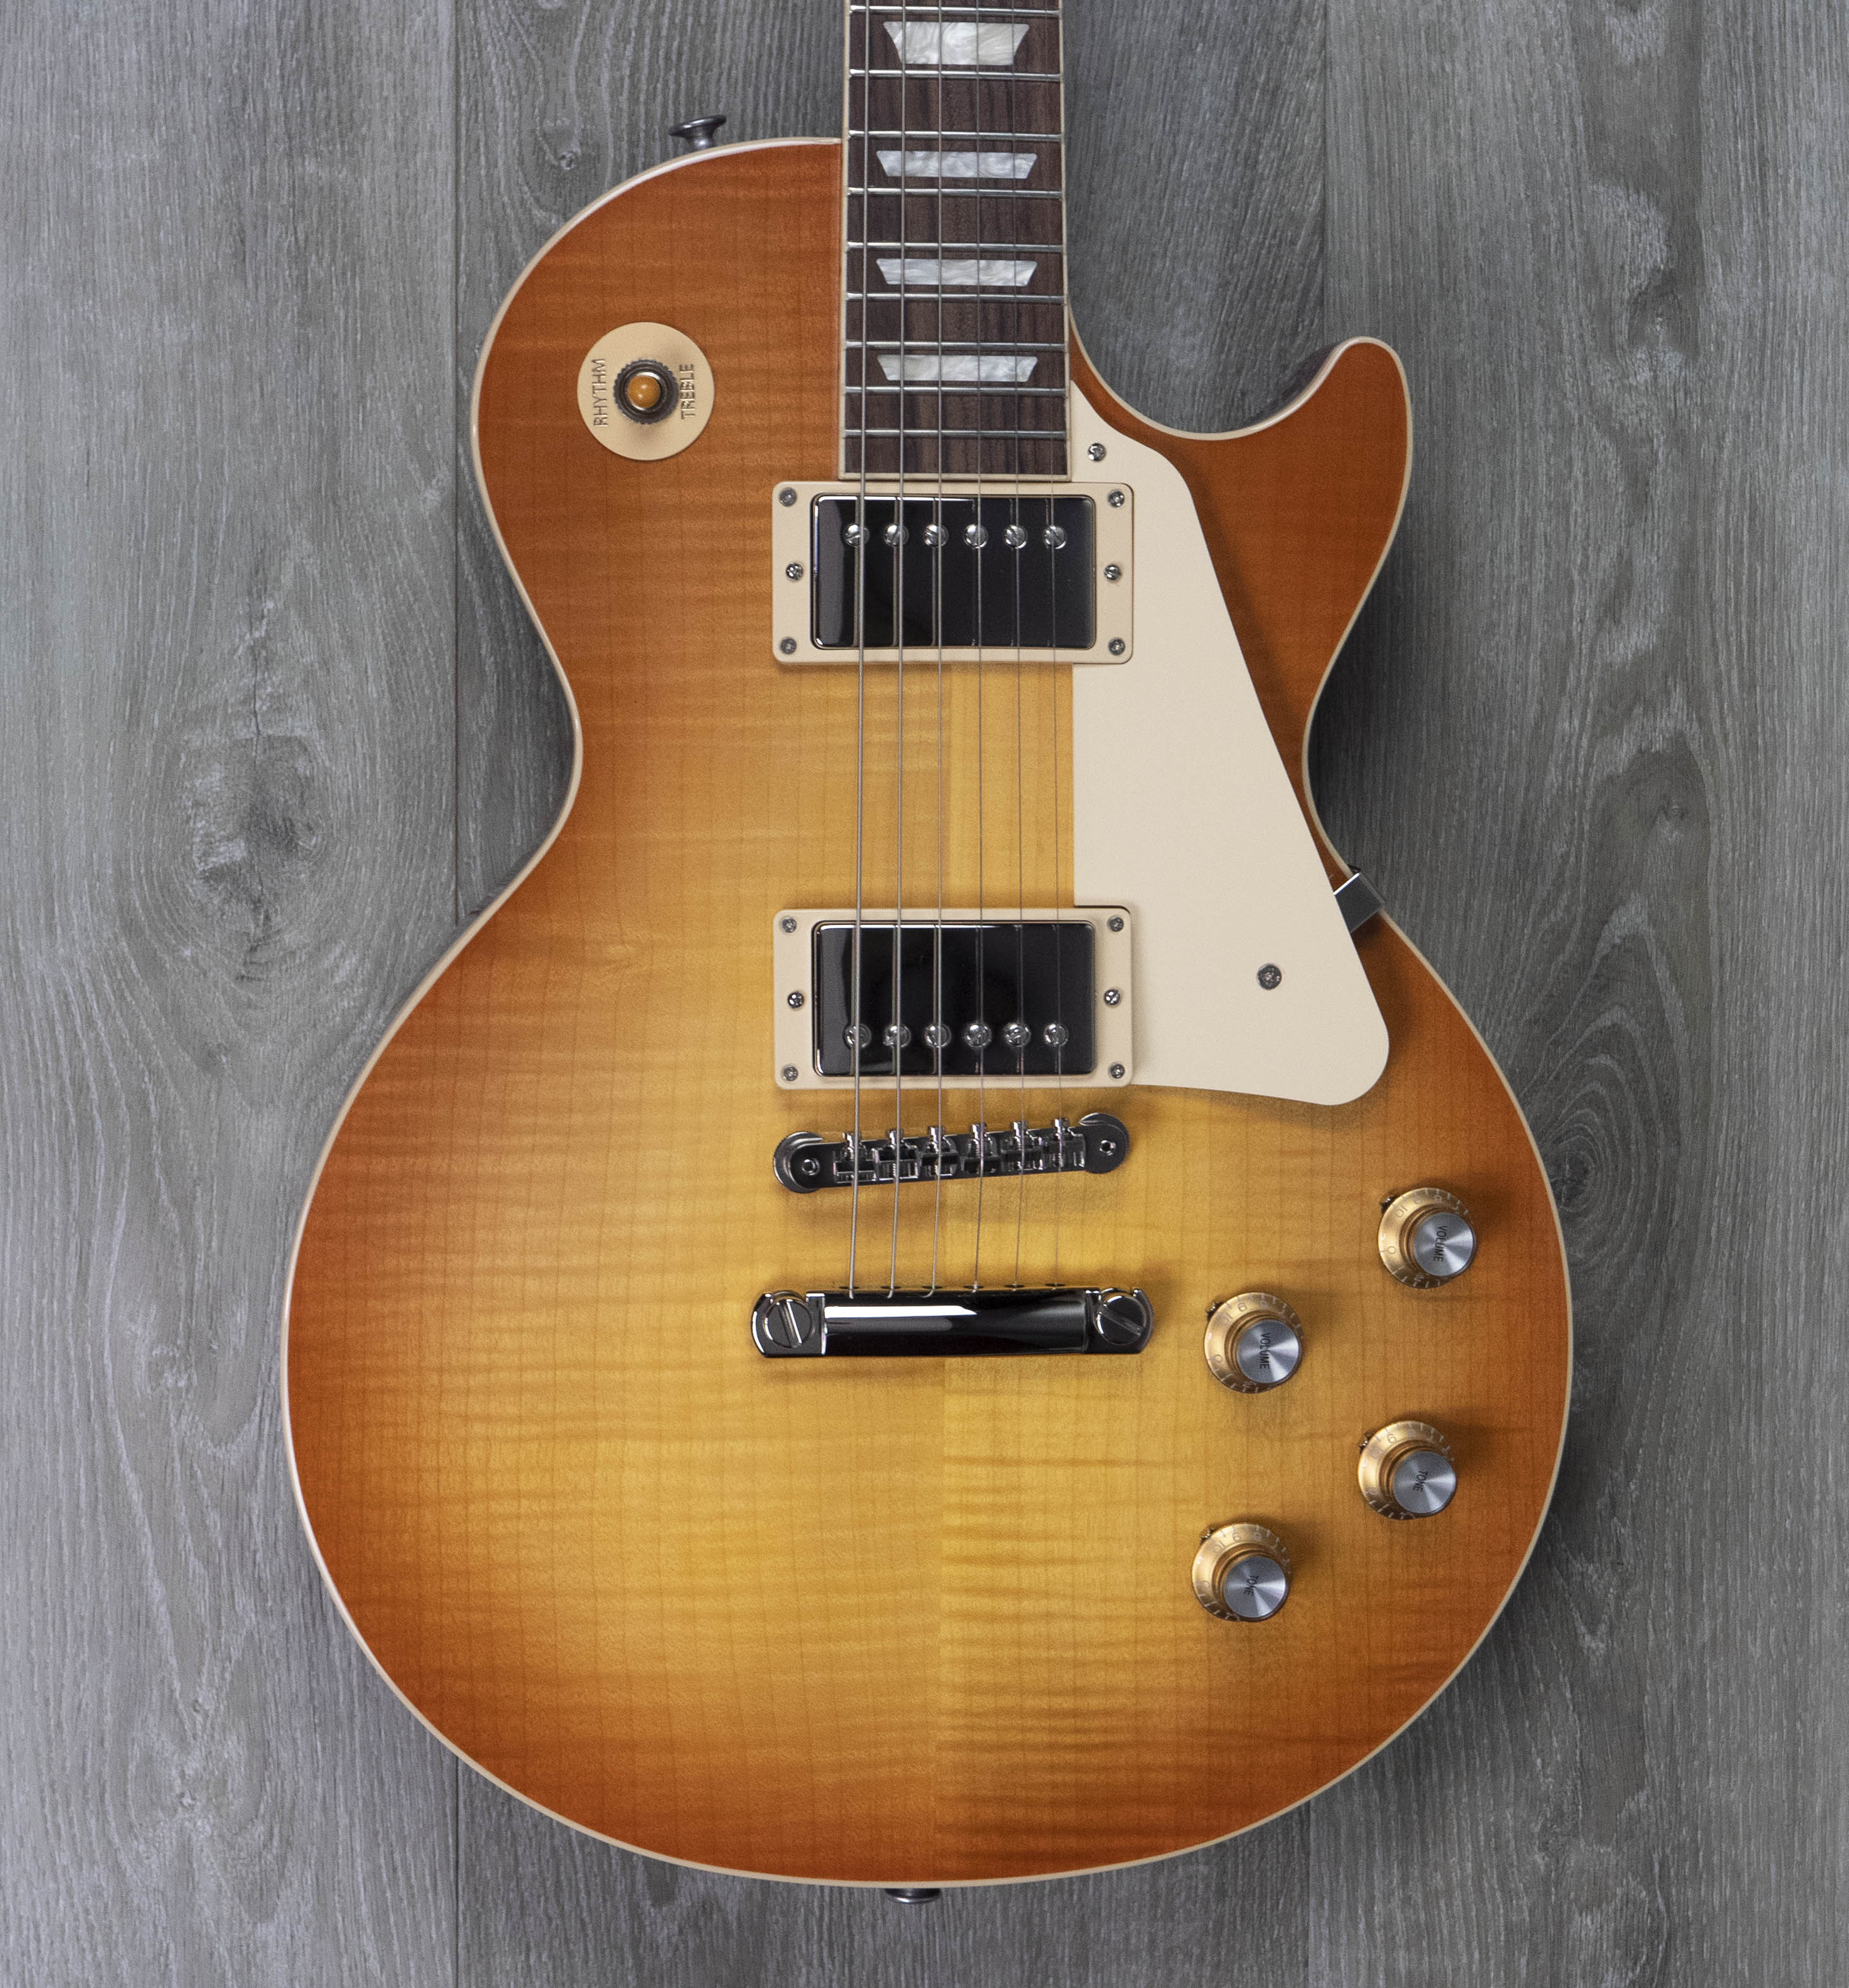 Gibson Les Paul Standard 60s Figured Top, Unburst #228930189 – A 